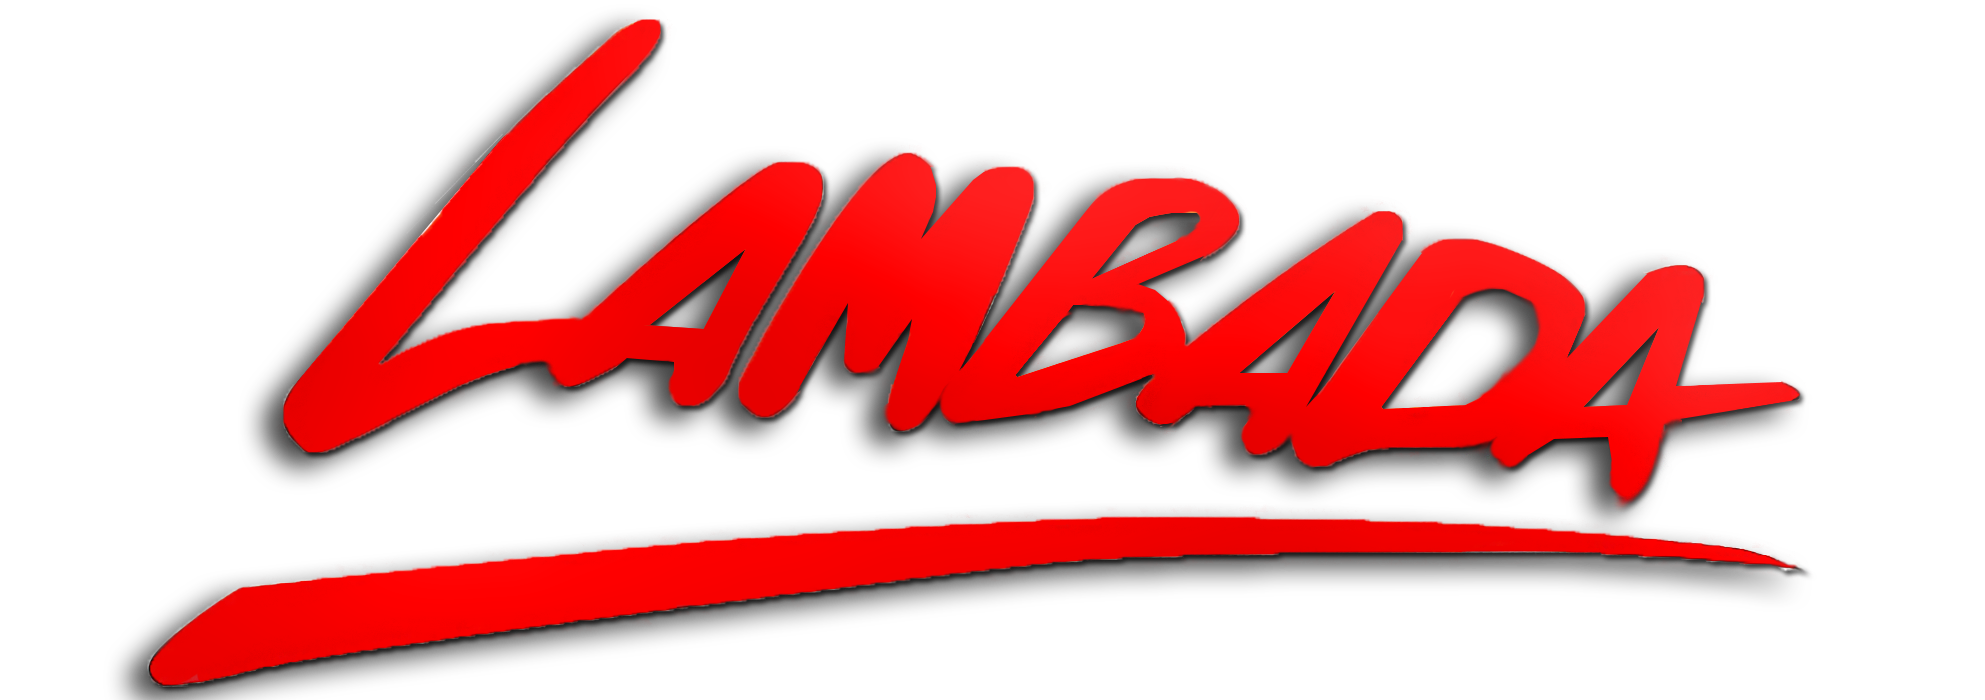 lambada restaurant is powered by bellpepper restaurant management system